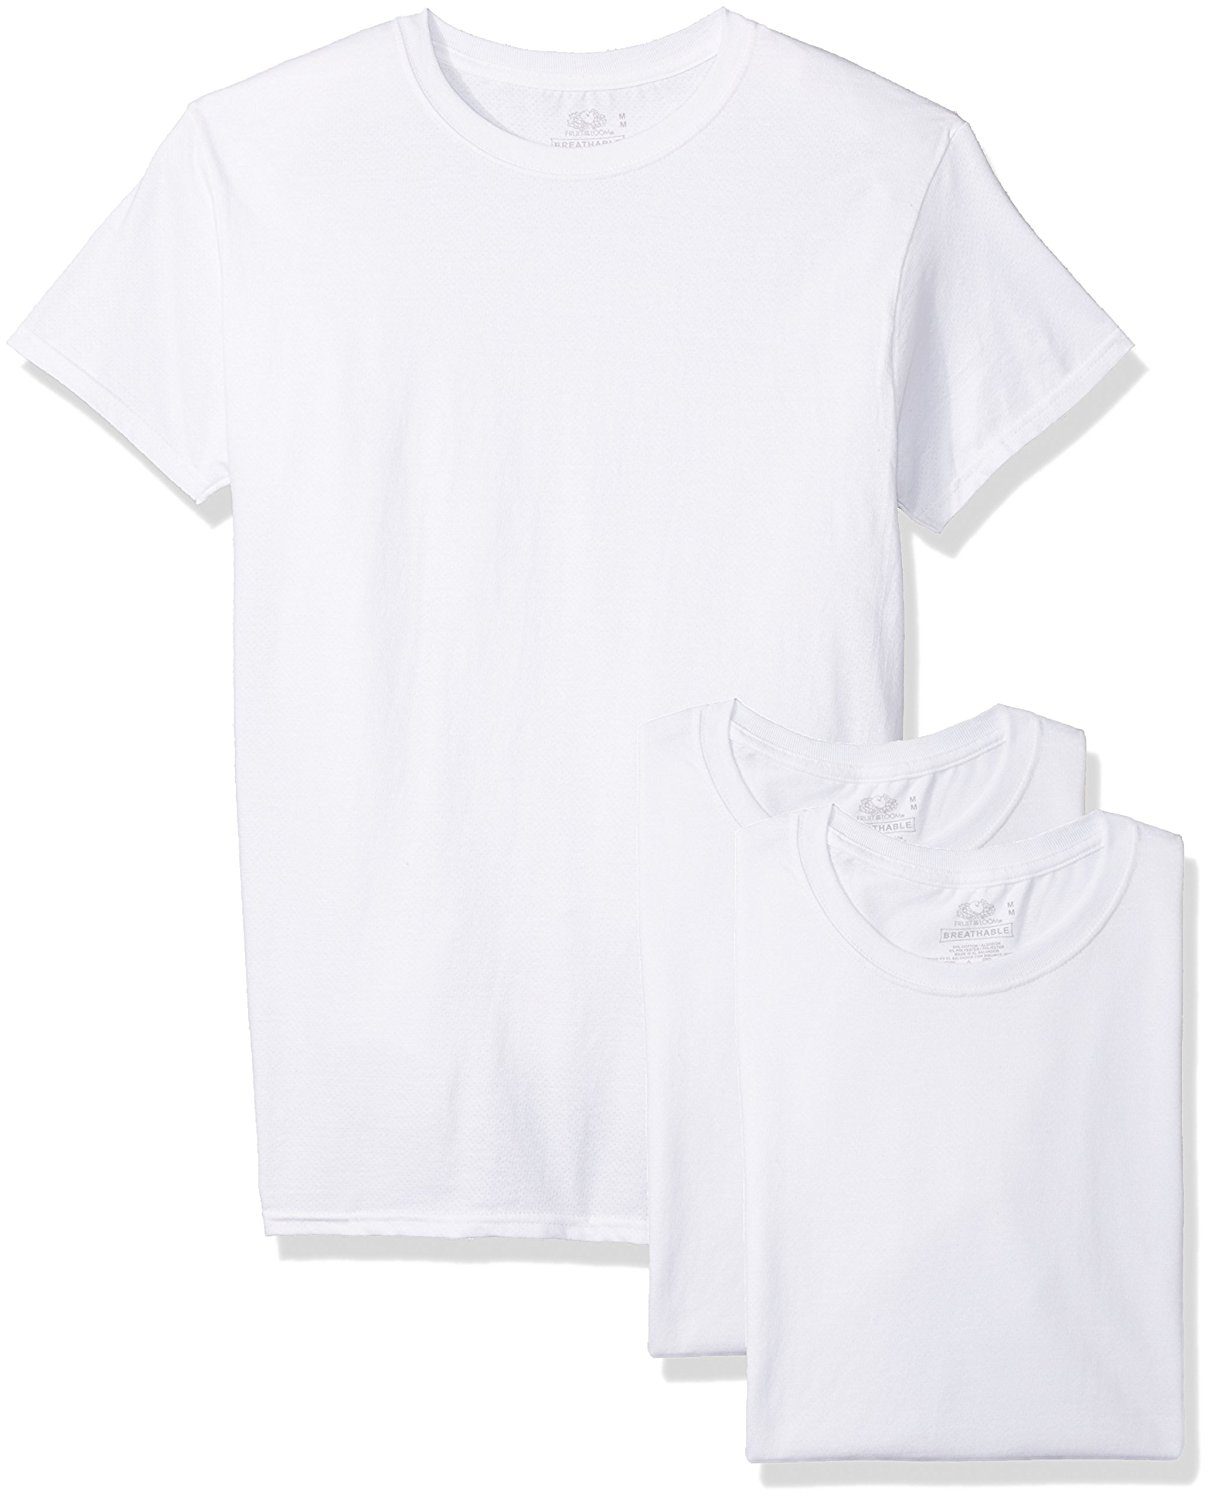 Men's Short Sleeve Breathable Cotton Crew T-Shirt, White 3 Pack